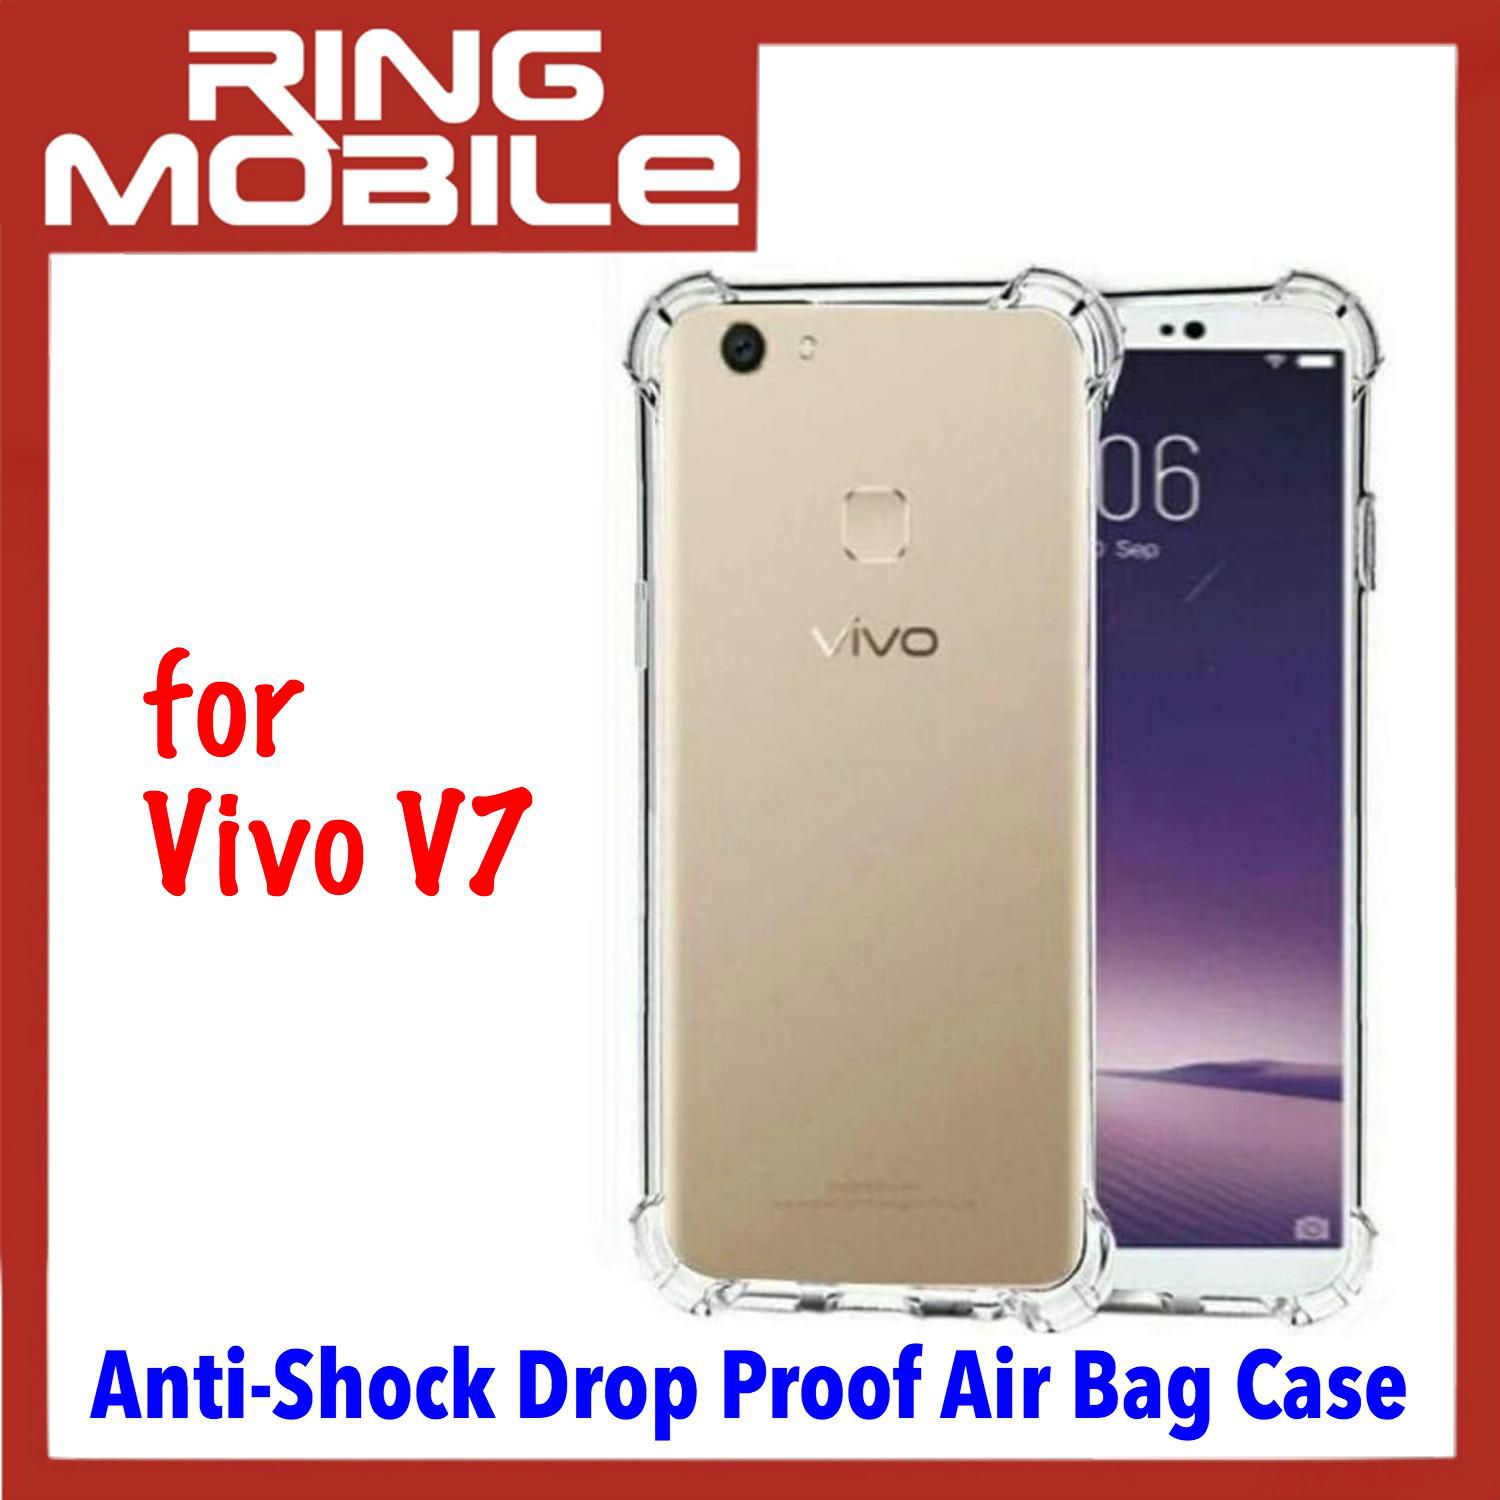 Bdotcom Anti-Shock Drop Proof Air Bag Case for Vivo V7 (Crystal Clear )